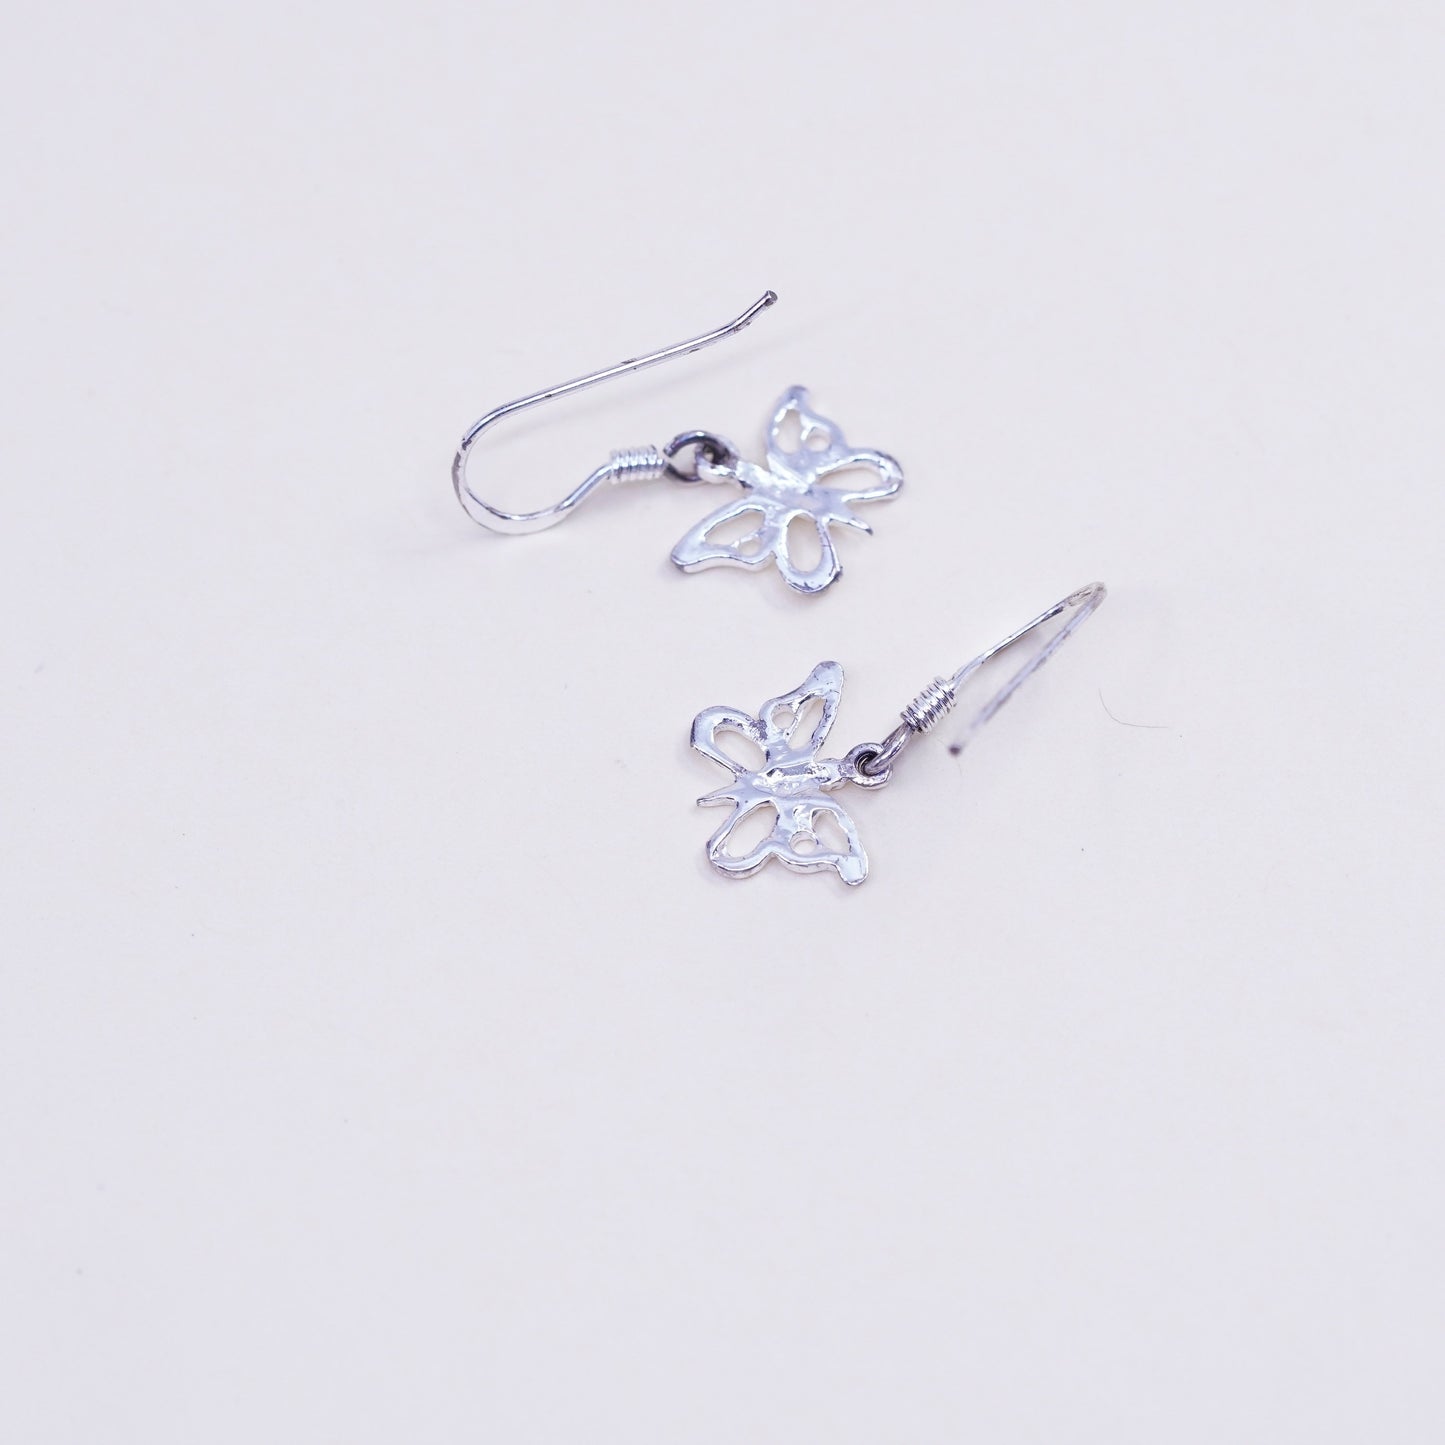 Vintage sterling silver handmade earrings, 925 butterfly dangles